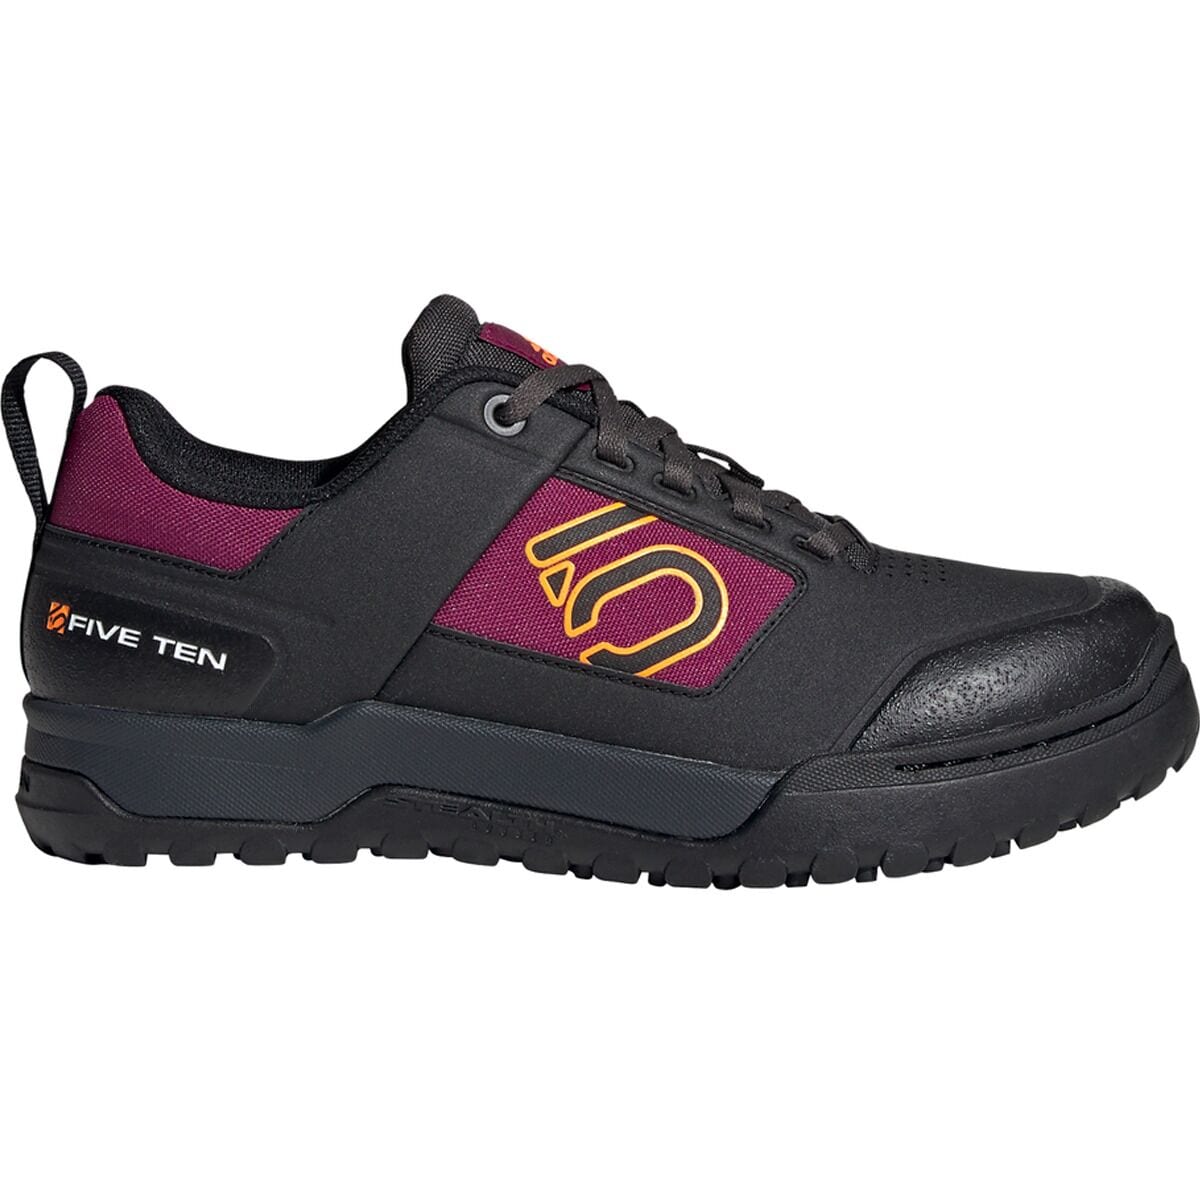 Five Ten Impact Pro Shoe - Women's Core Black/Signal Orange/Power Berry, 8.5